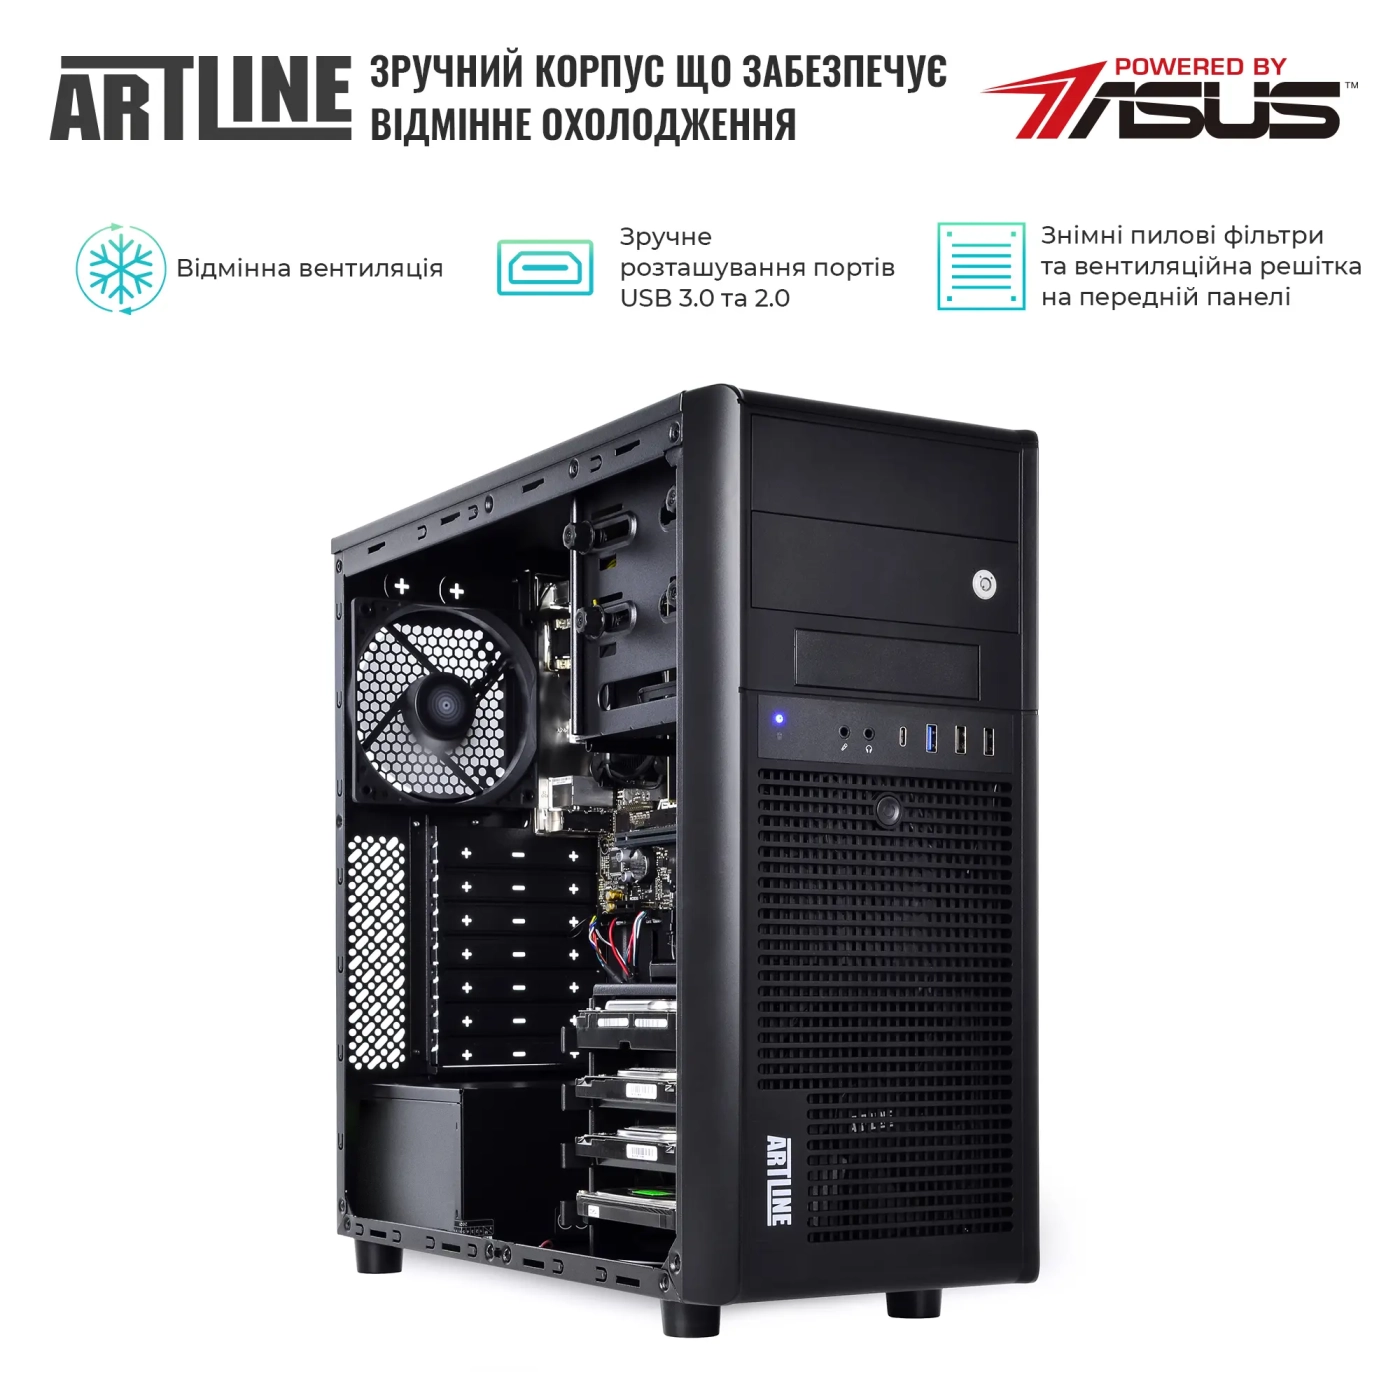 Купити Сервер ARTLINE Business T37v19 - фото 3